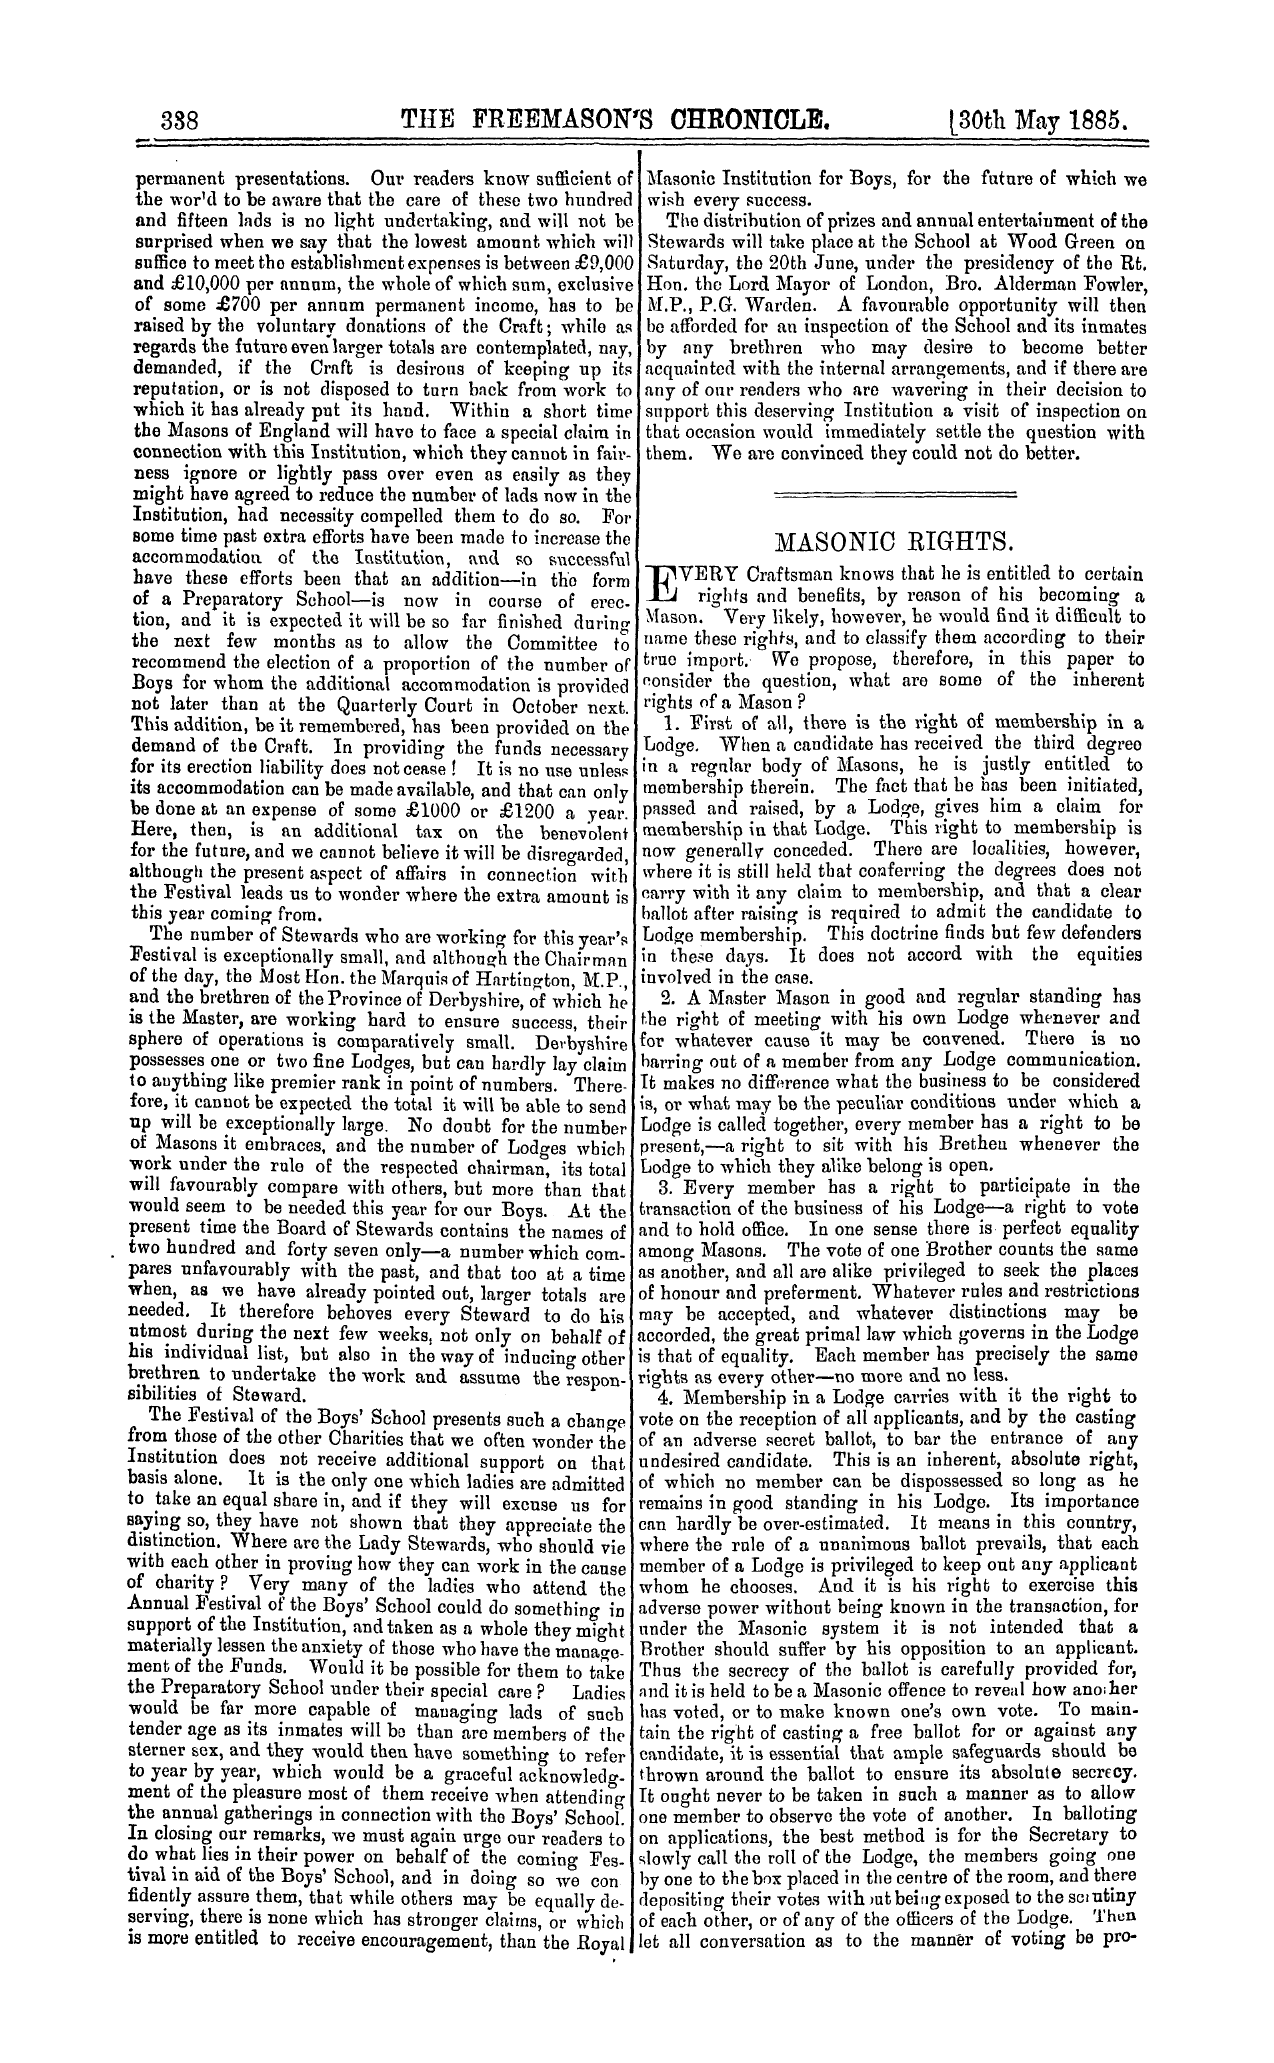 The Freemason's Chronicle: 1885-05-30 - Masonic Rights.